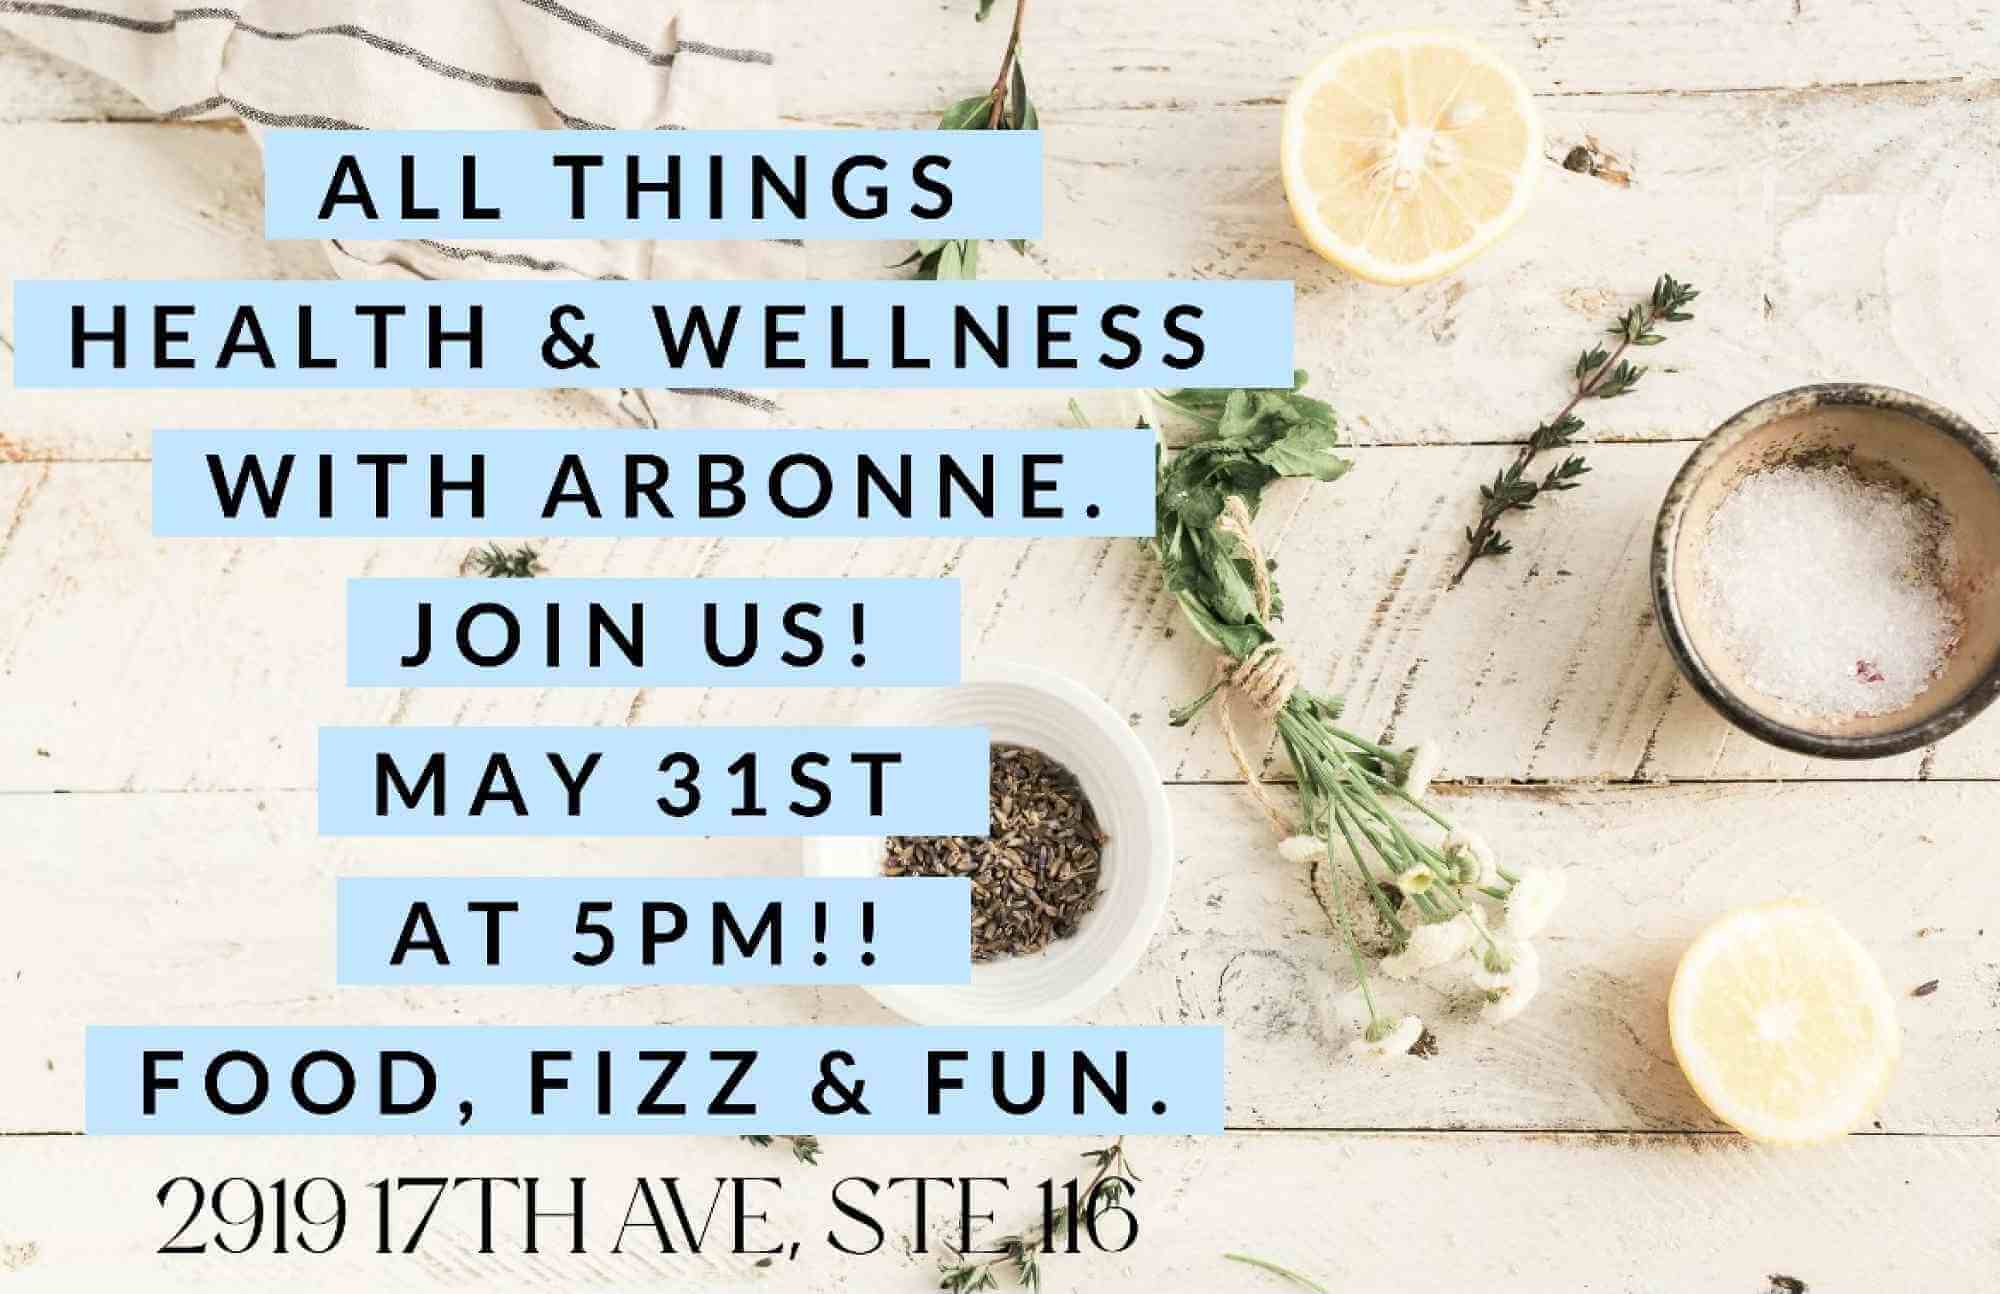 Food, Fizz & Fun with Arbonne!